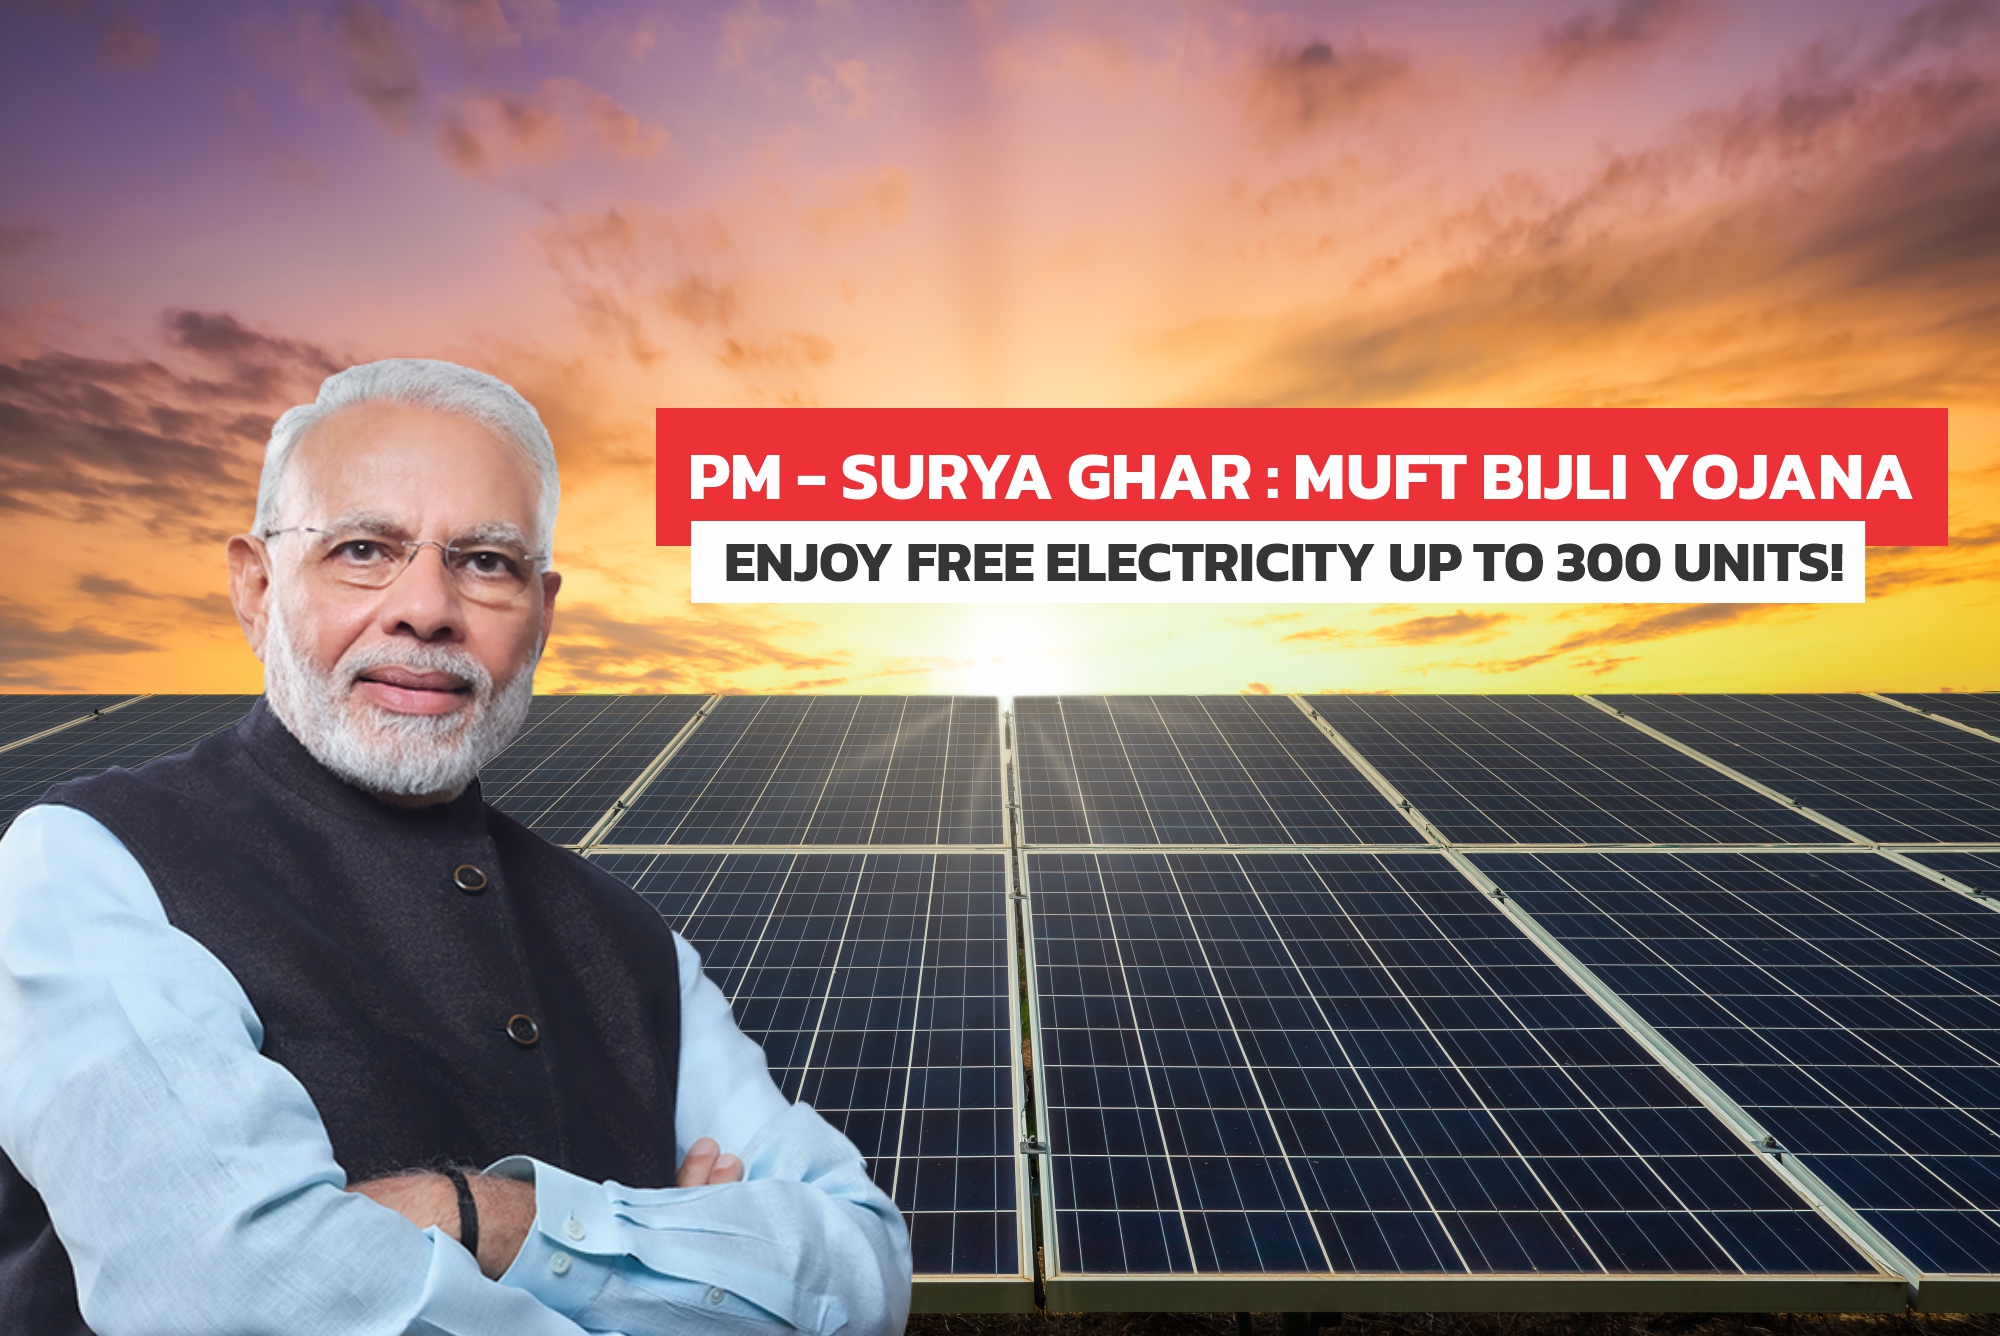 Introducing PM Surya Ghar Muft Bijli Yojana: Enjoy Free Electricity up to 300 Units! 